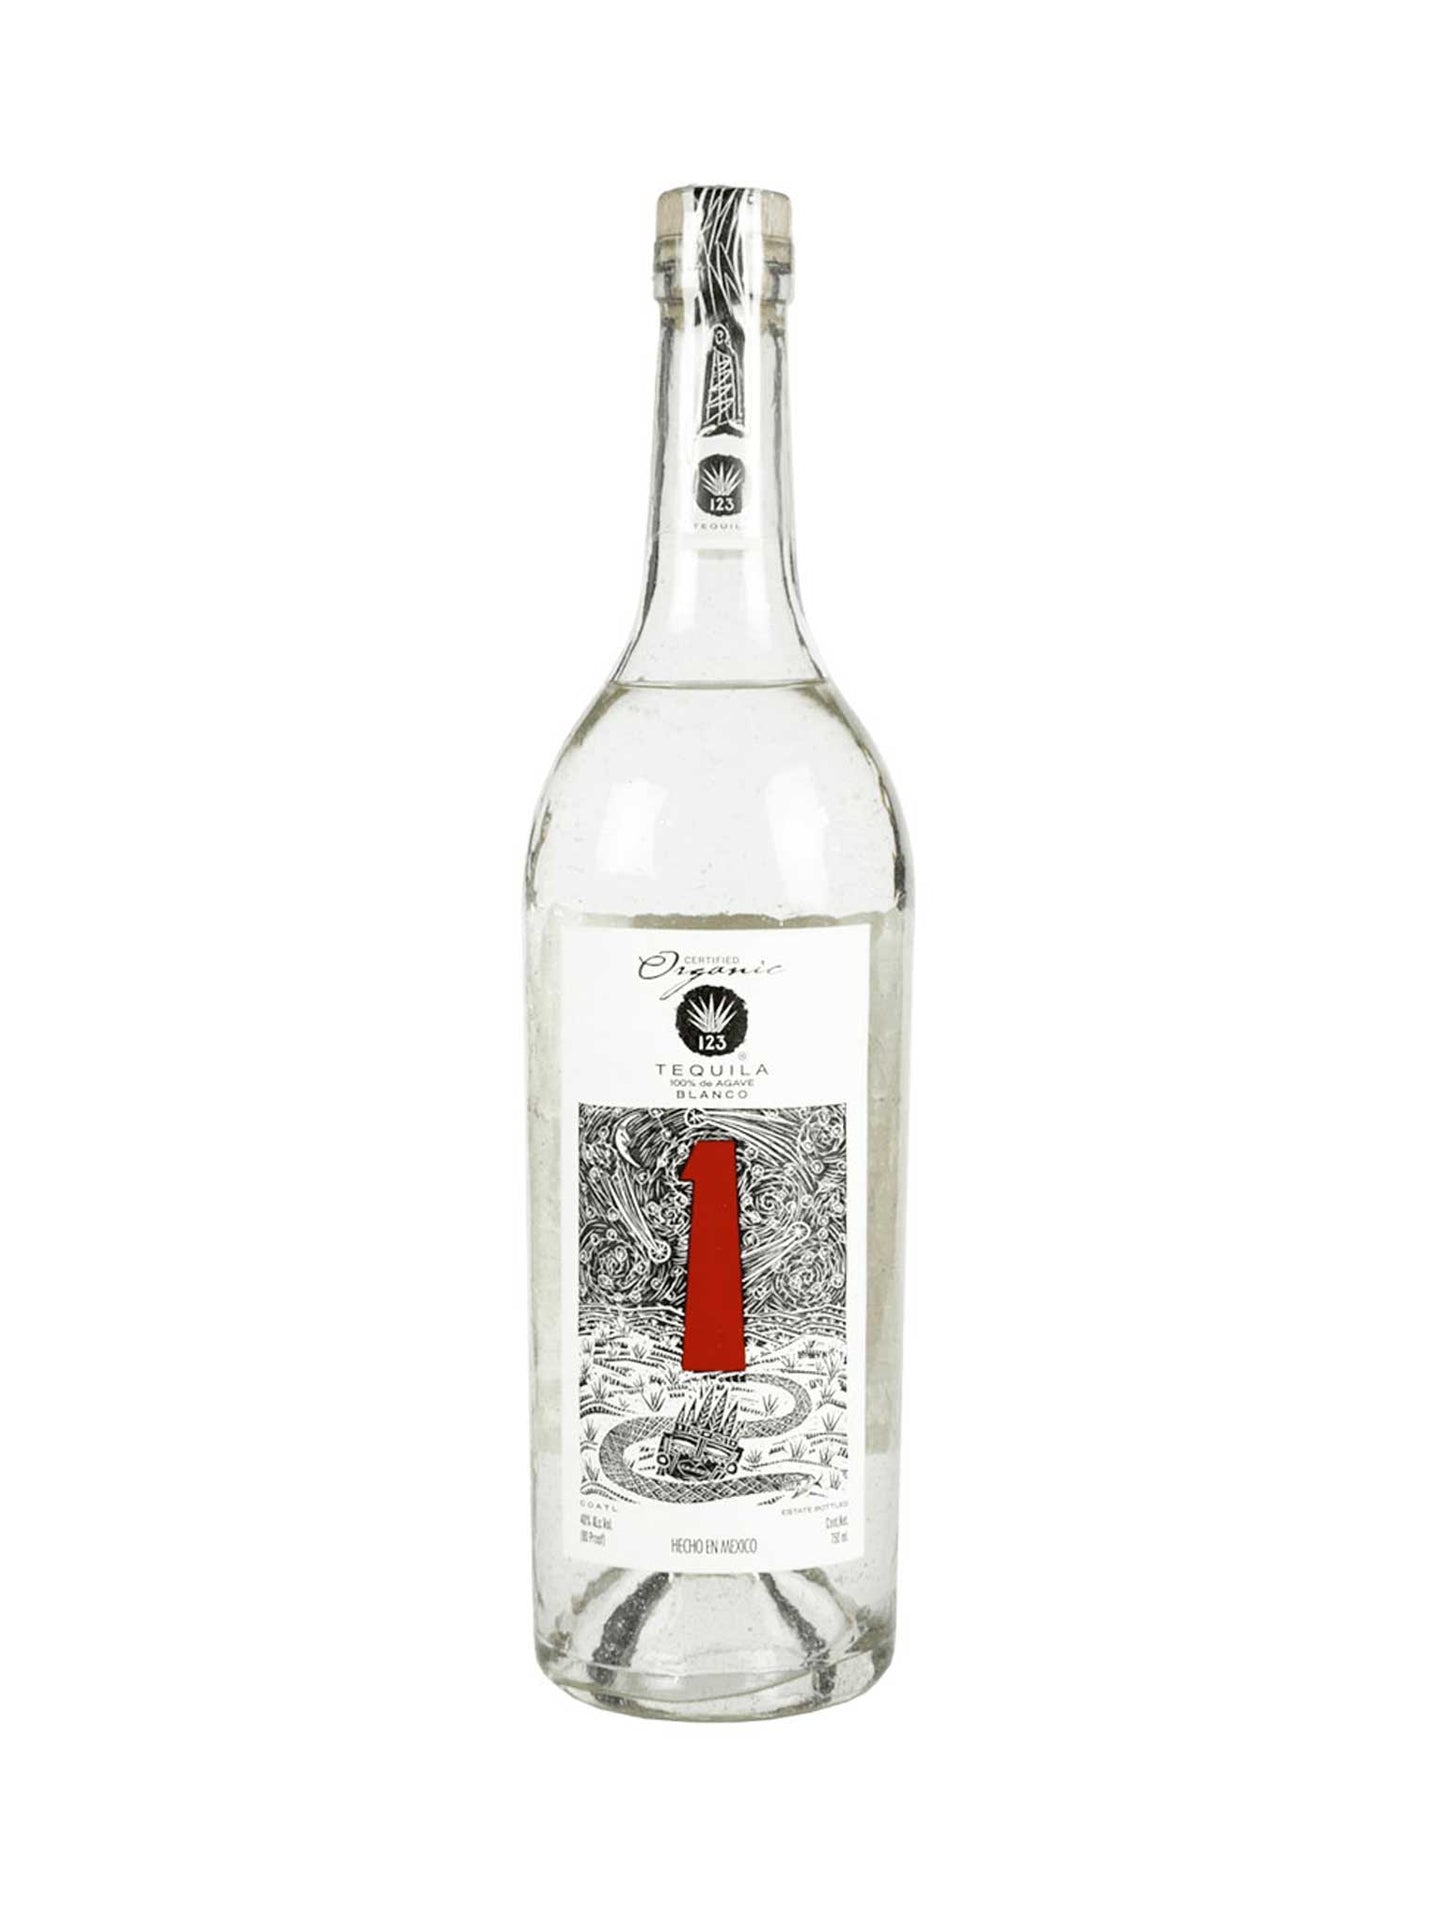 123 Organic Tequila #1 Blanco 750mL